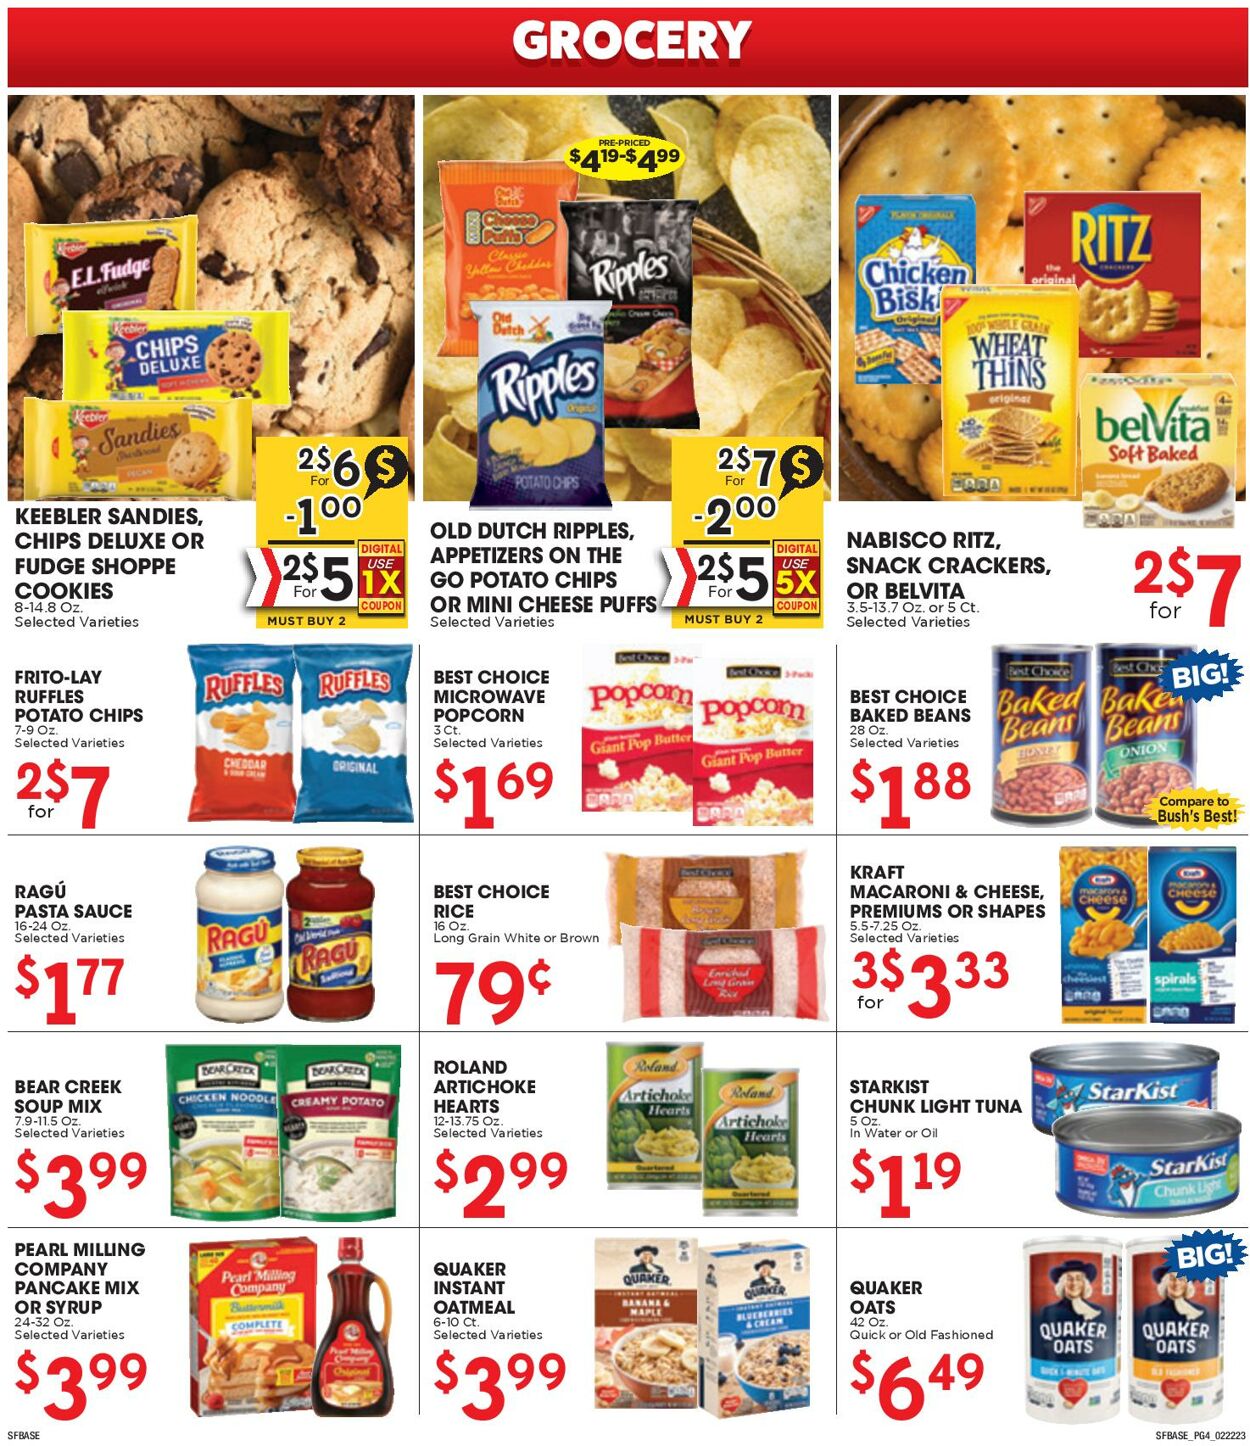 Weekly ad Sunshine Foods 02/22/2023 - 02/28/2023